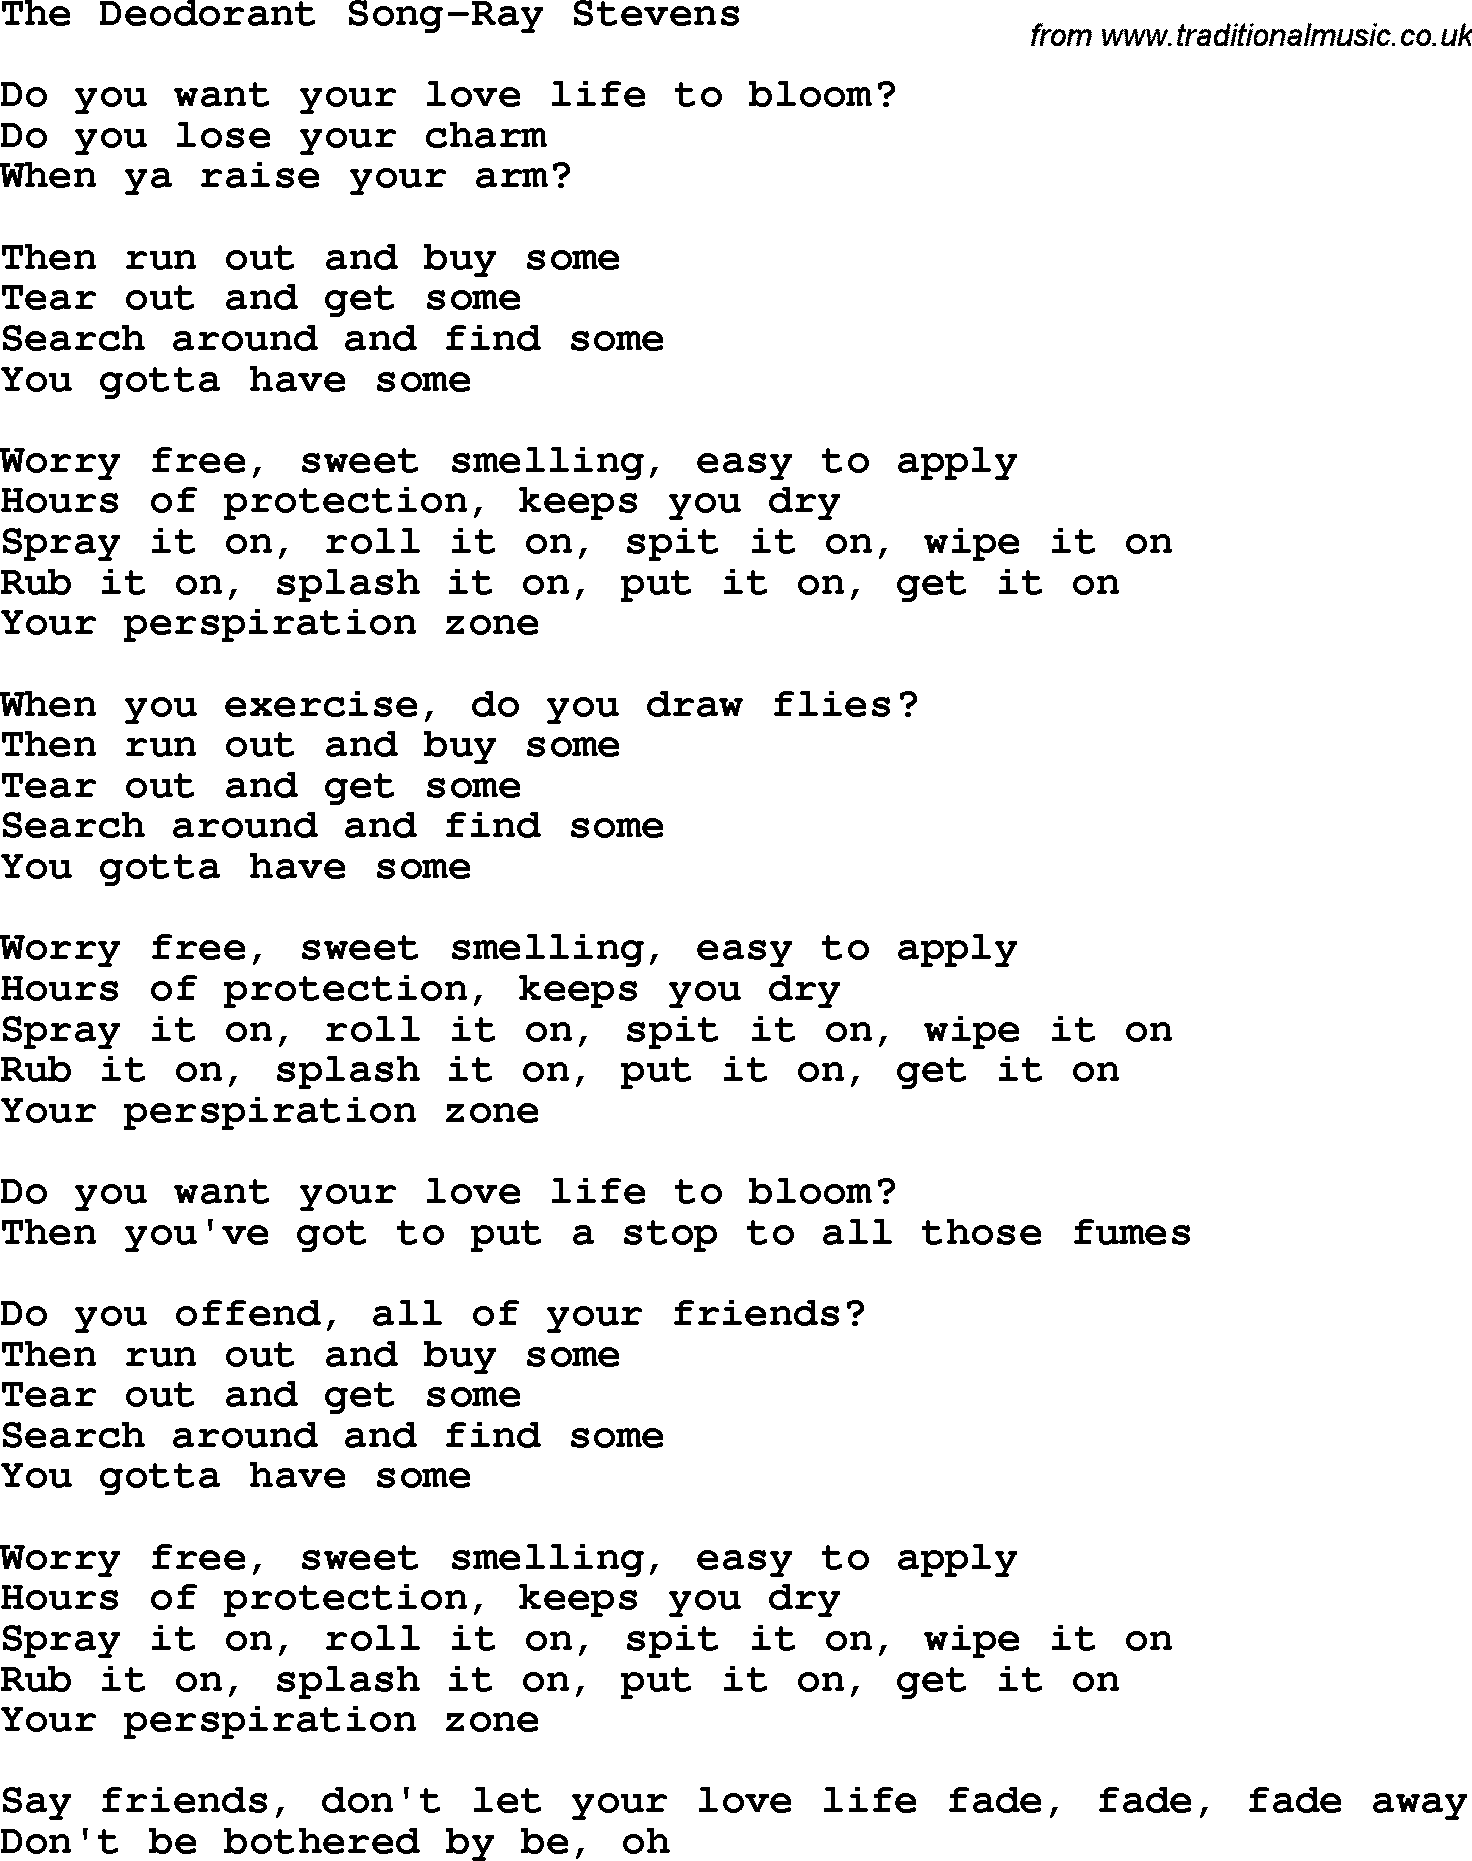 Novelty song: The Deodorant Song-Ray Stevens lyrics